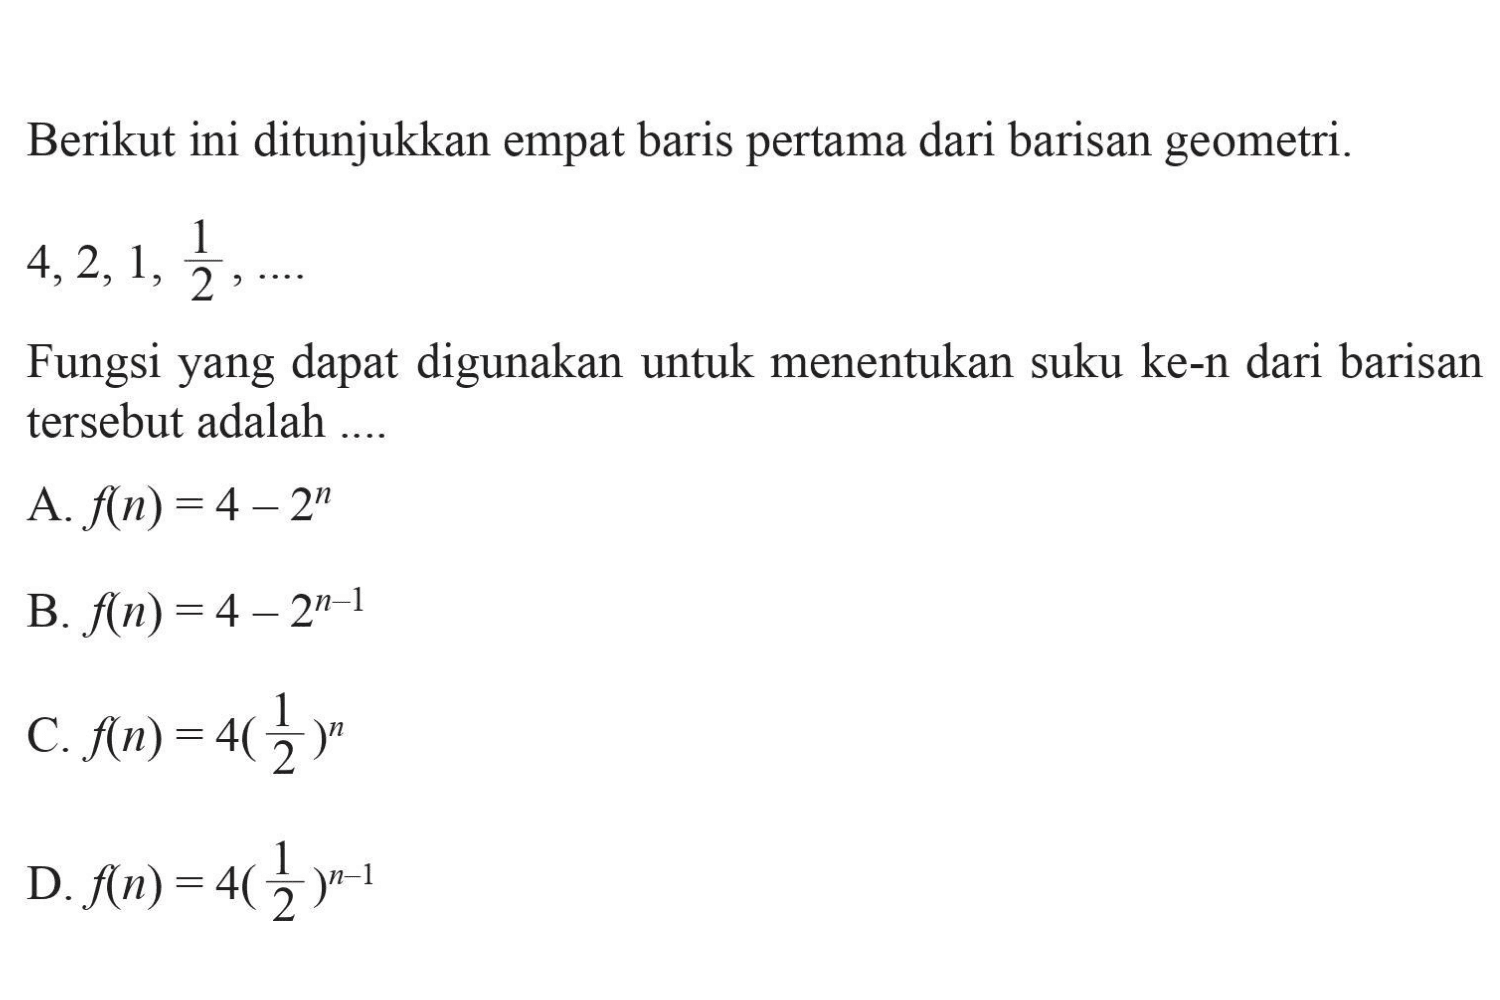 Berikut ini ditunjukkan empat baris pertama dari
 barisan geometri. 4,2,1,1/2, ....
 Fungsi yang dapat digunakan untuk menentukan
 suku ke-n dari barisan tersebut adalah ..
 a. f(n)=4-2^n
 b. f(n)=4-2^n-1
 c. f(n)=4(1/2)^n
 d. f(n)=4(1/2)^n-1